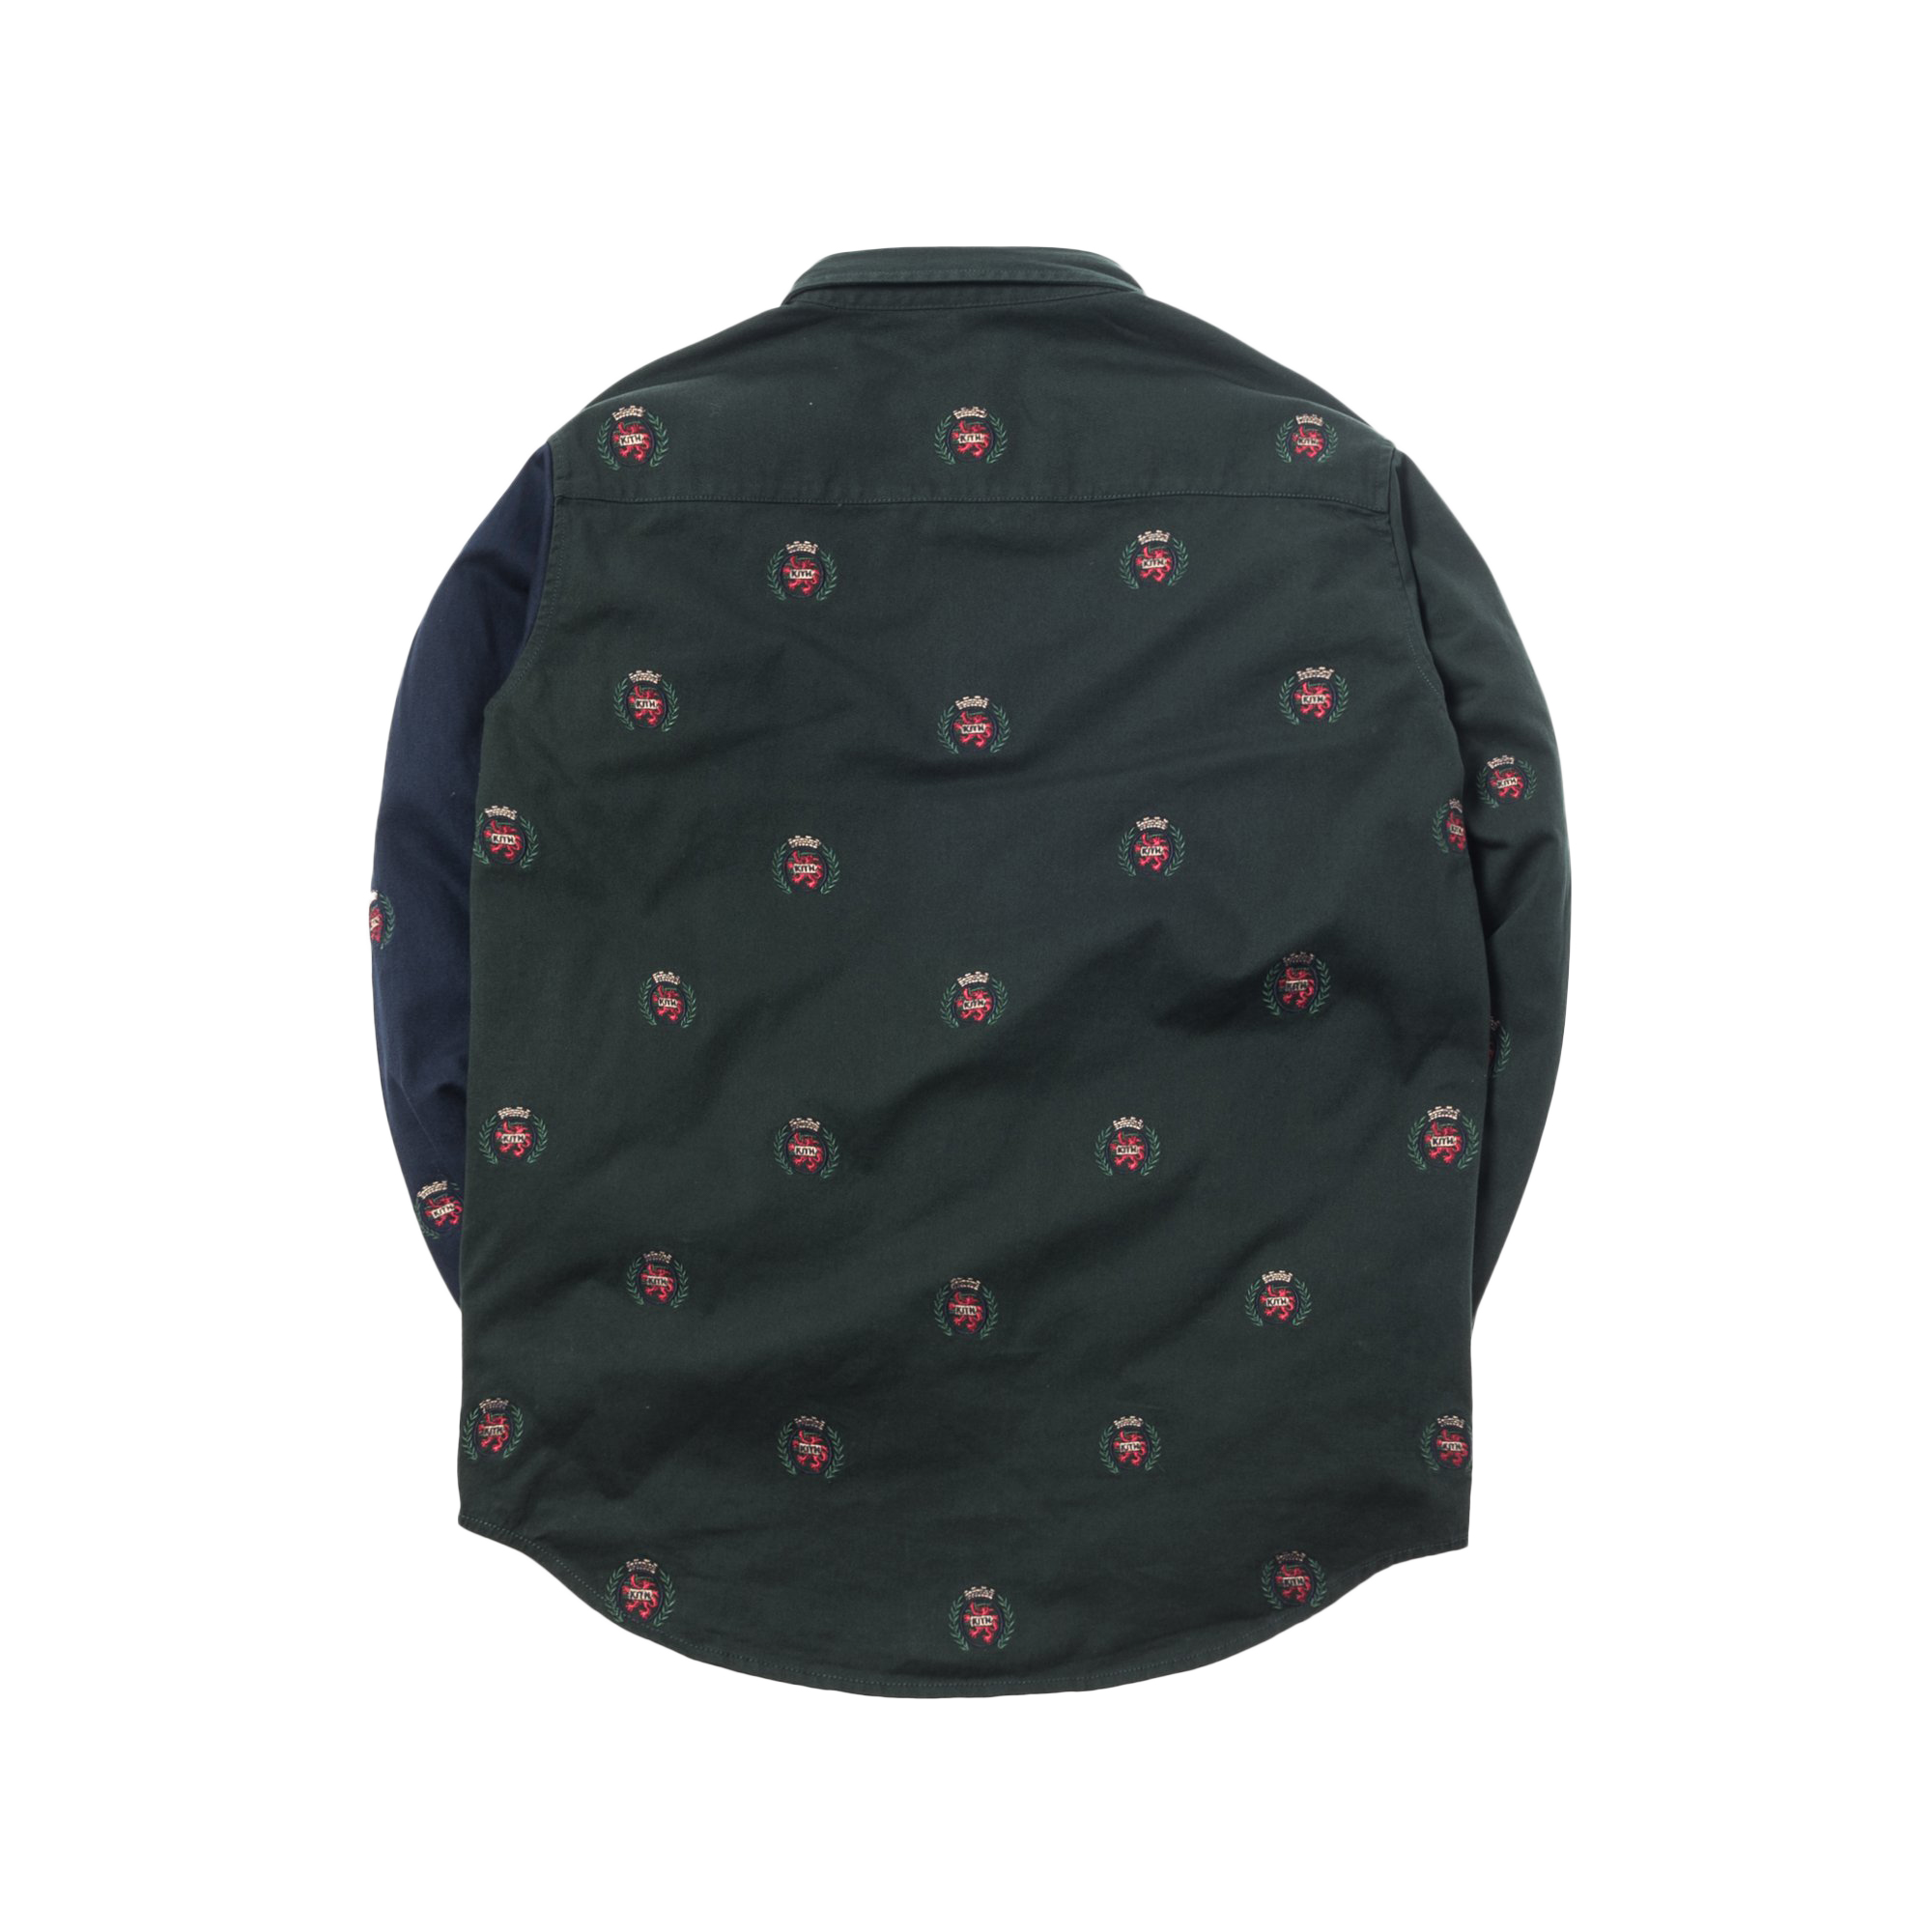 Kith x Tommy Hilfiger Twill Woven Shirt Multi Men's - FW18 - US